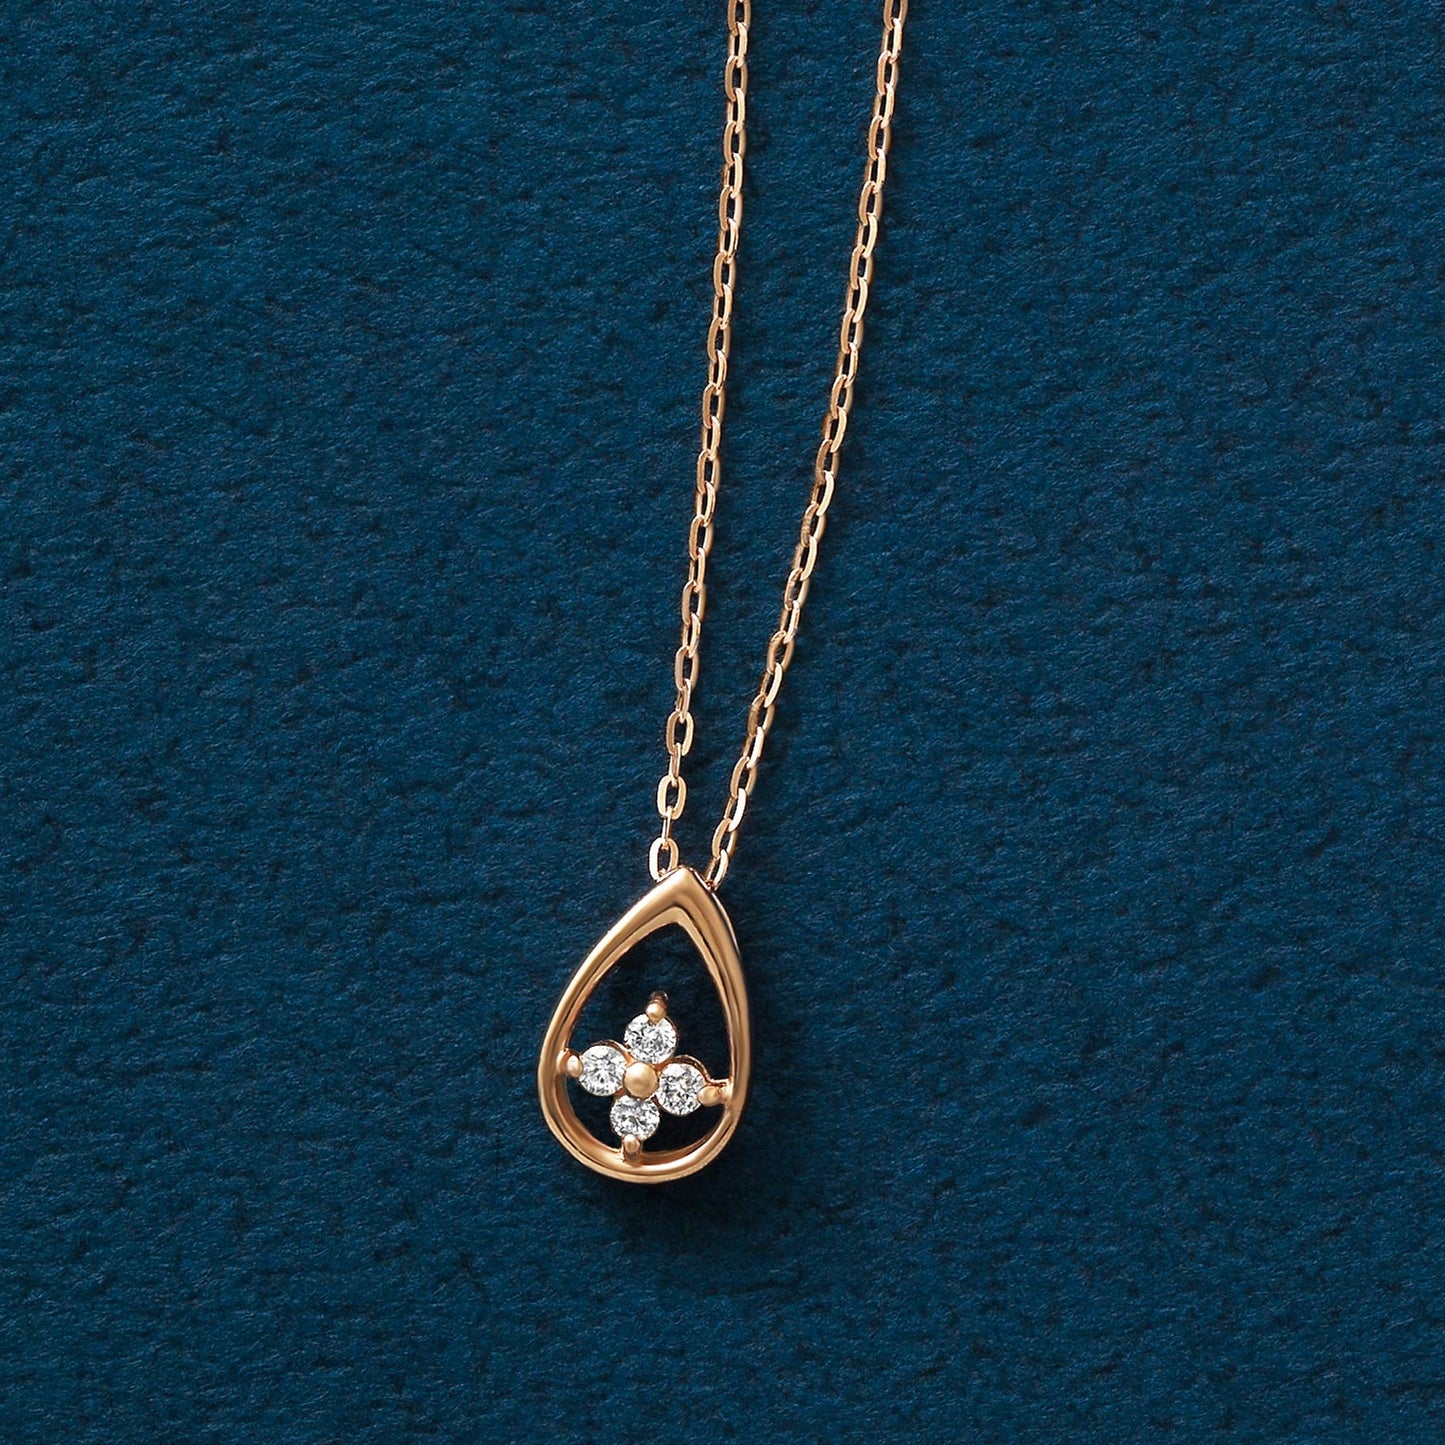 10K Rose Gold Diamond Dew Drop Clover Necklace - Product Image